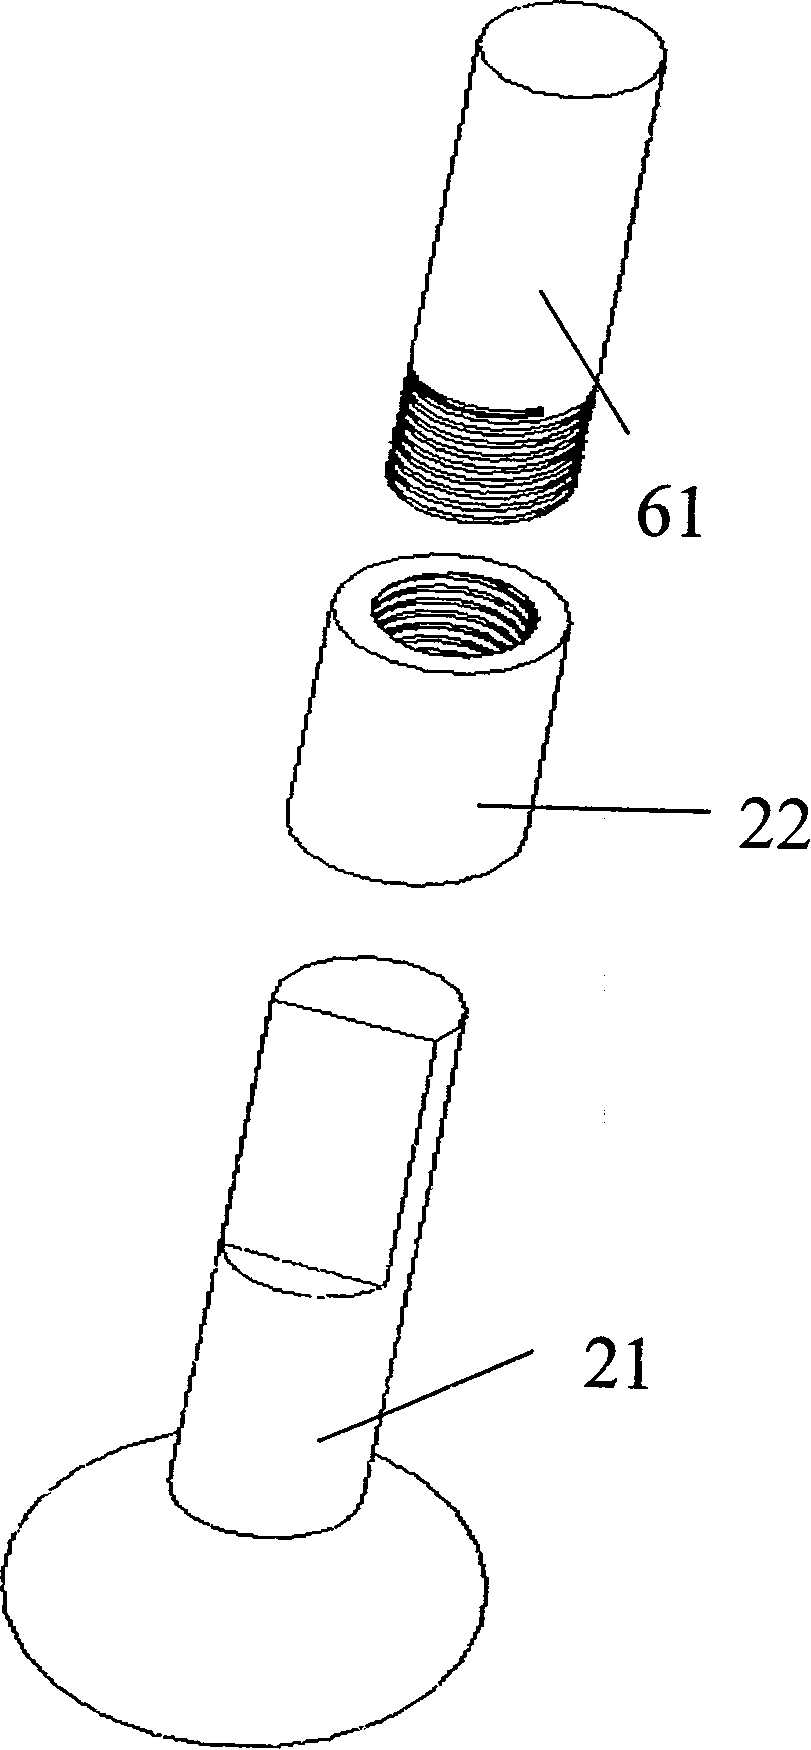 Microwave sulphur lamp bulb connection structure